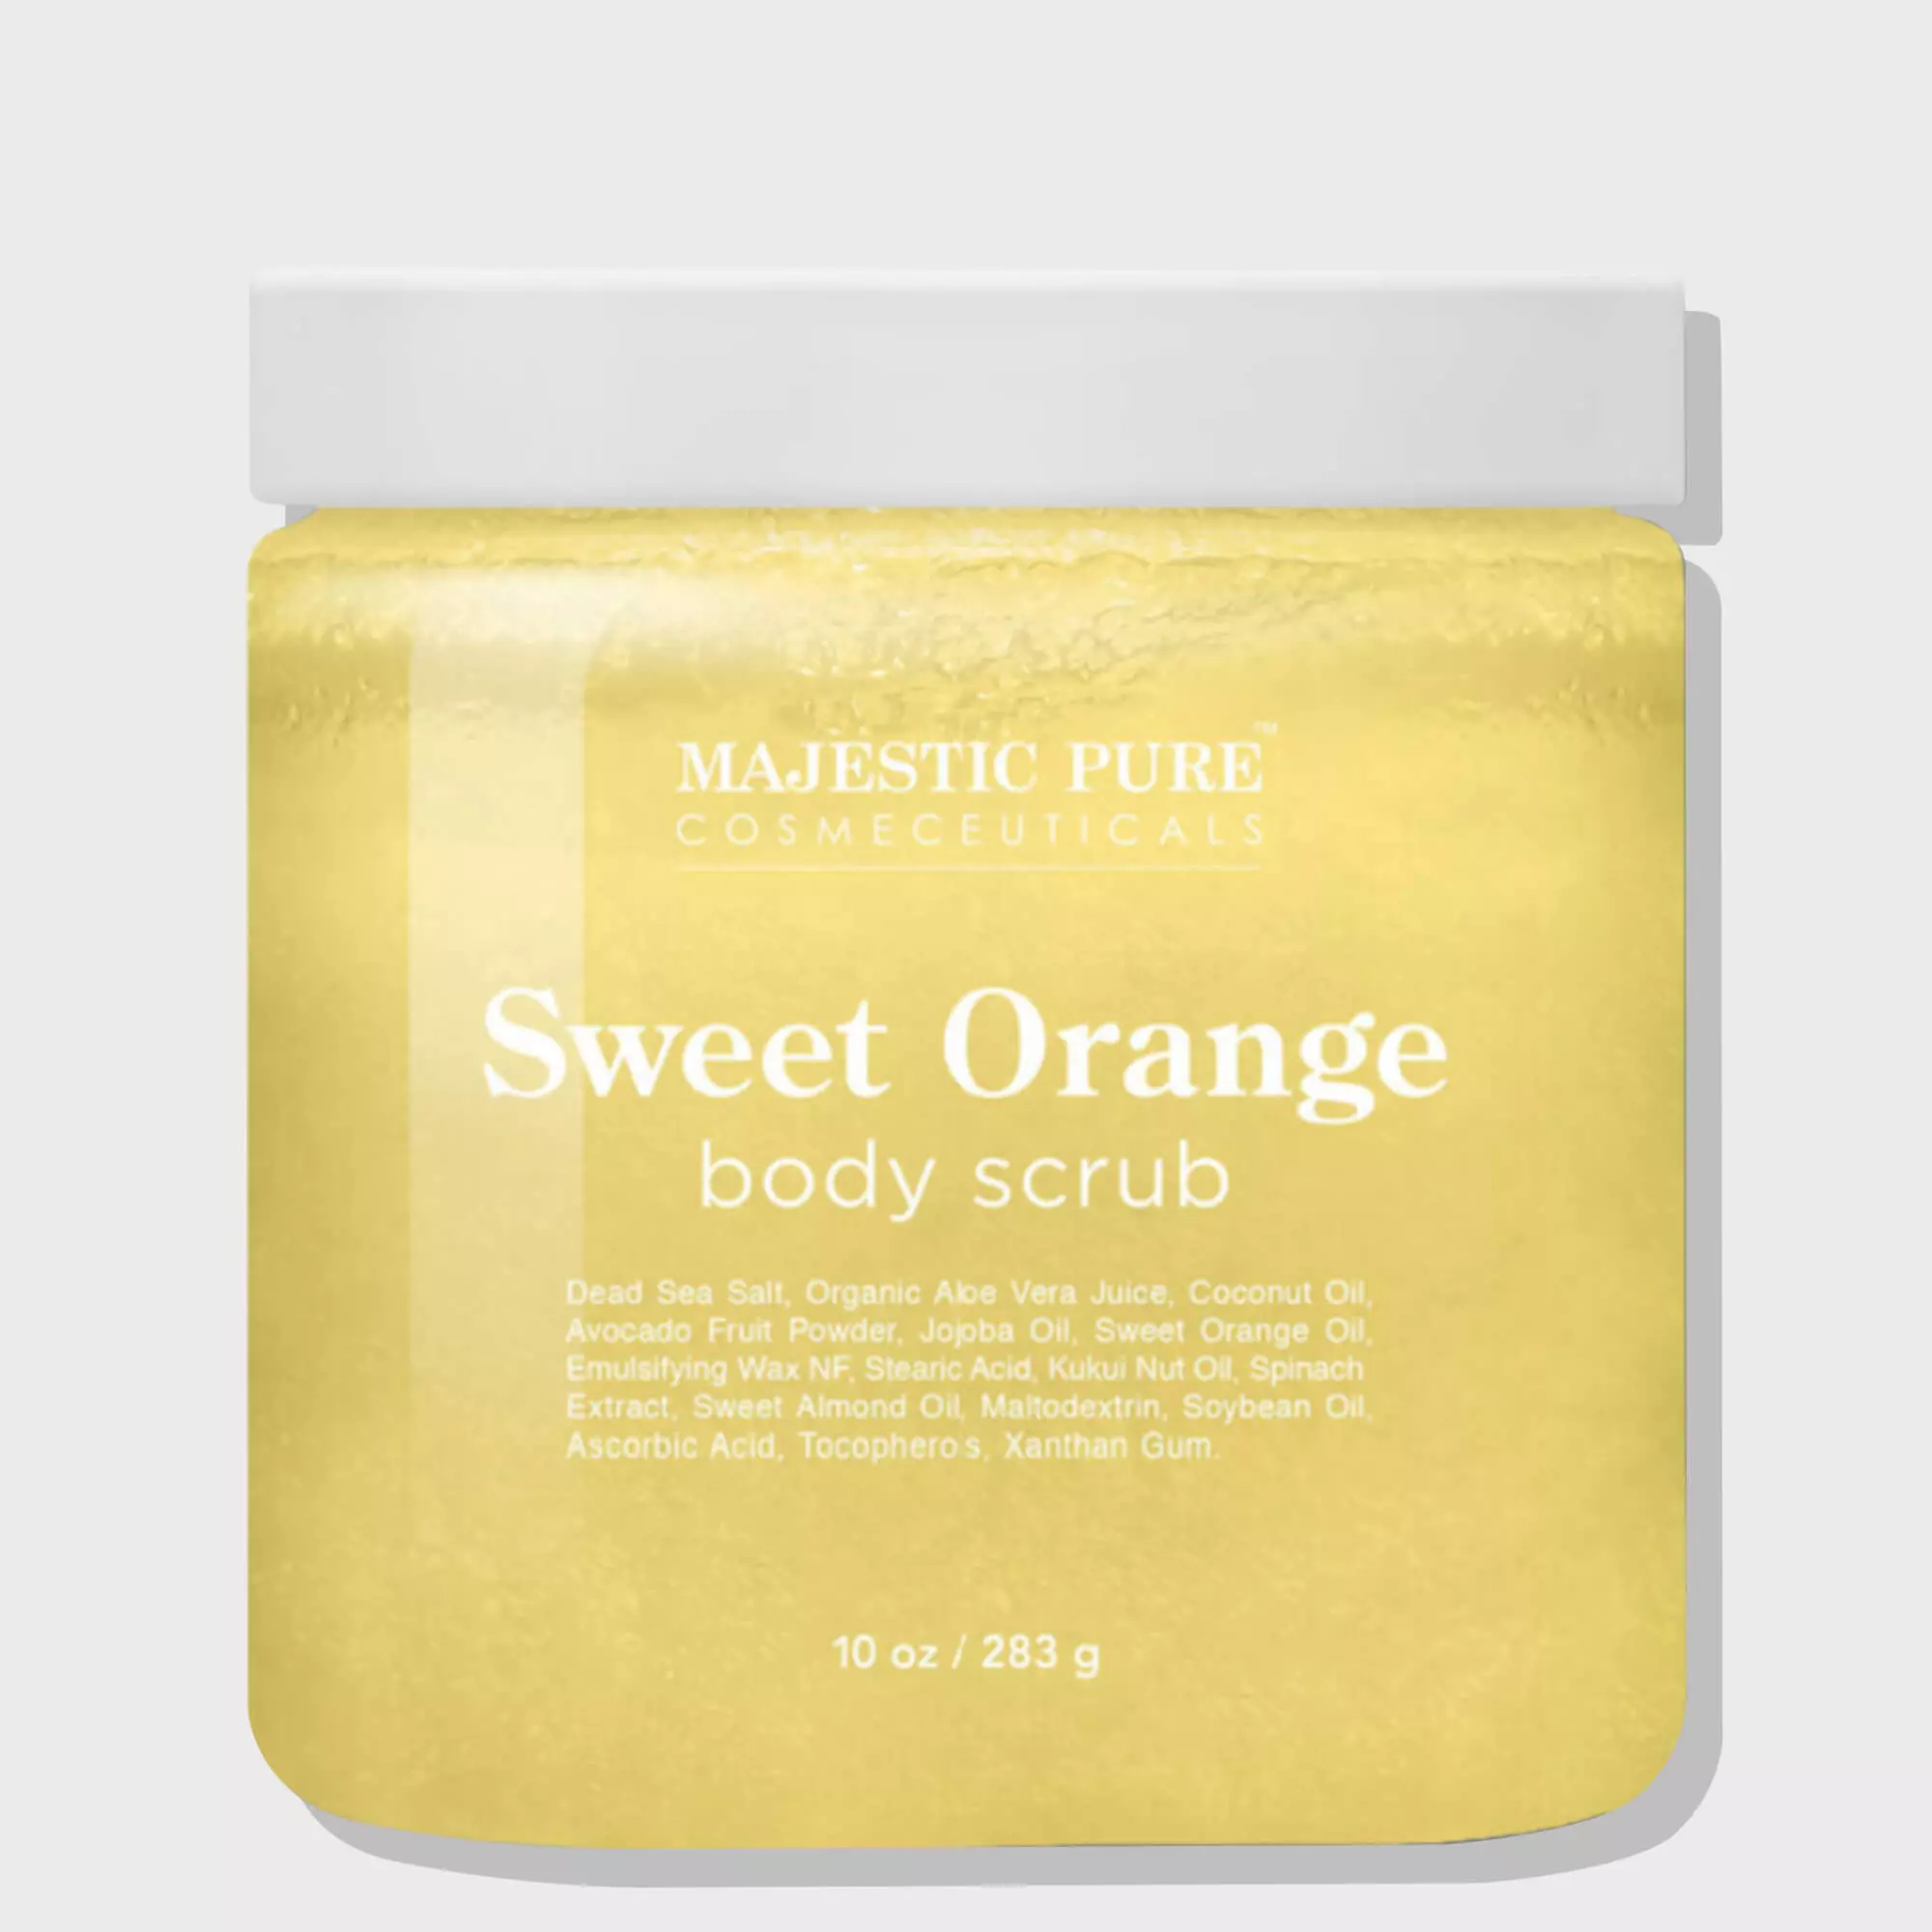 Majestic Pure Sweet Orange Body Scrub - Exfoliates